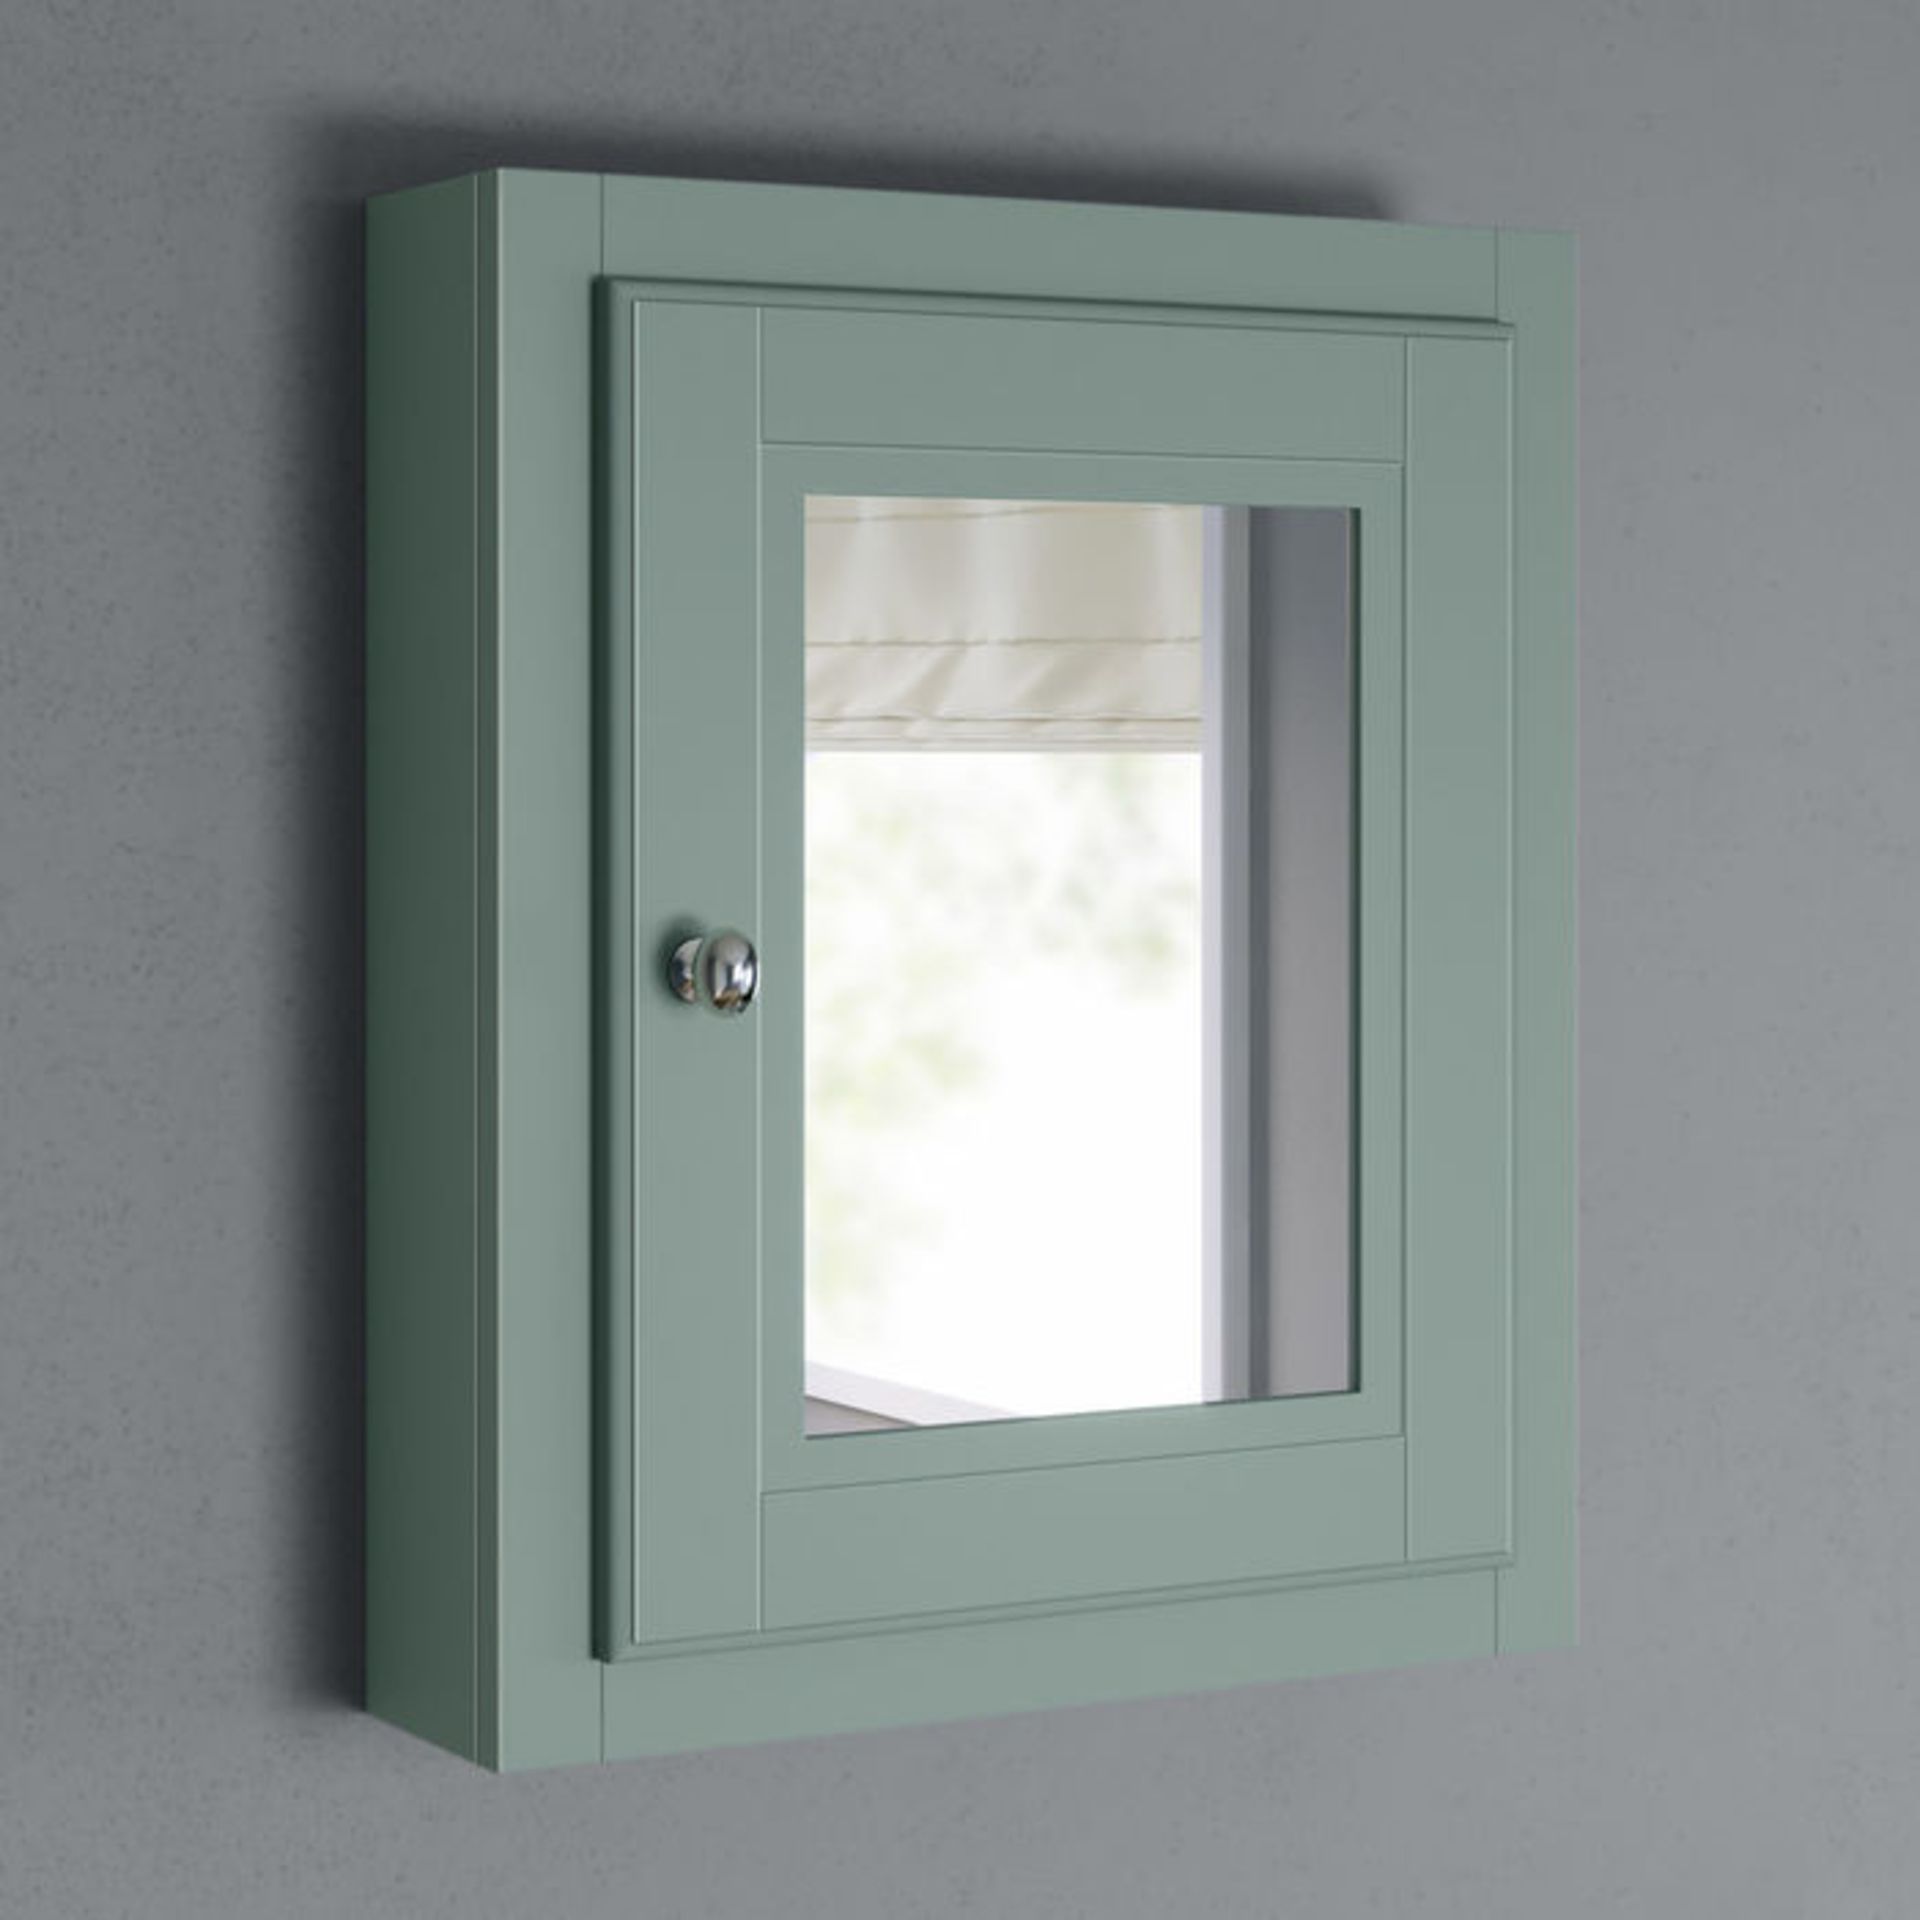 (CS208) Cambridge Single Door Mirror Cabinet - Marine Mist. RRP £199.99. Traditional aesthetic